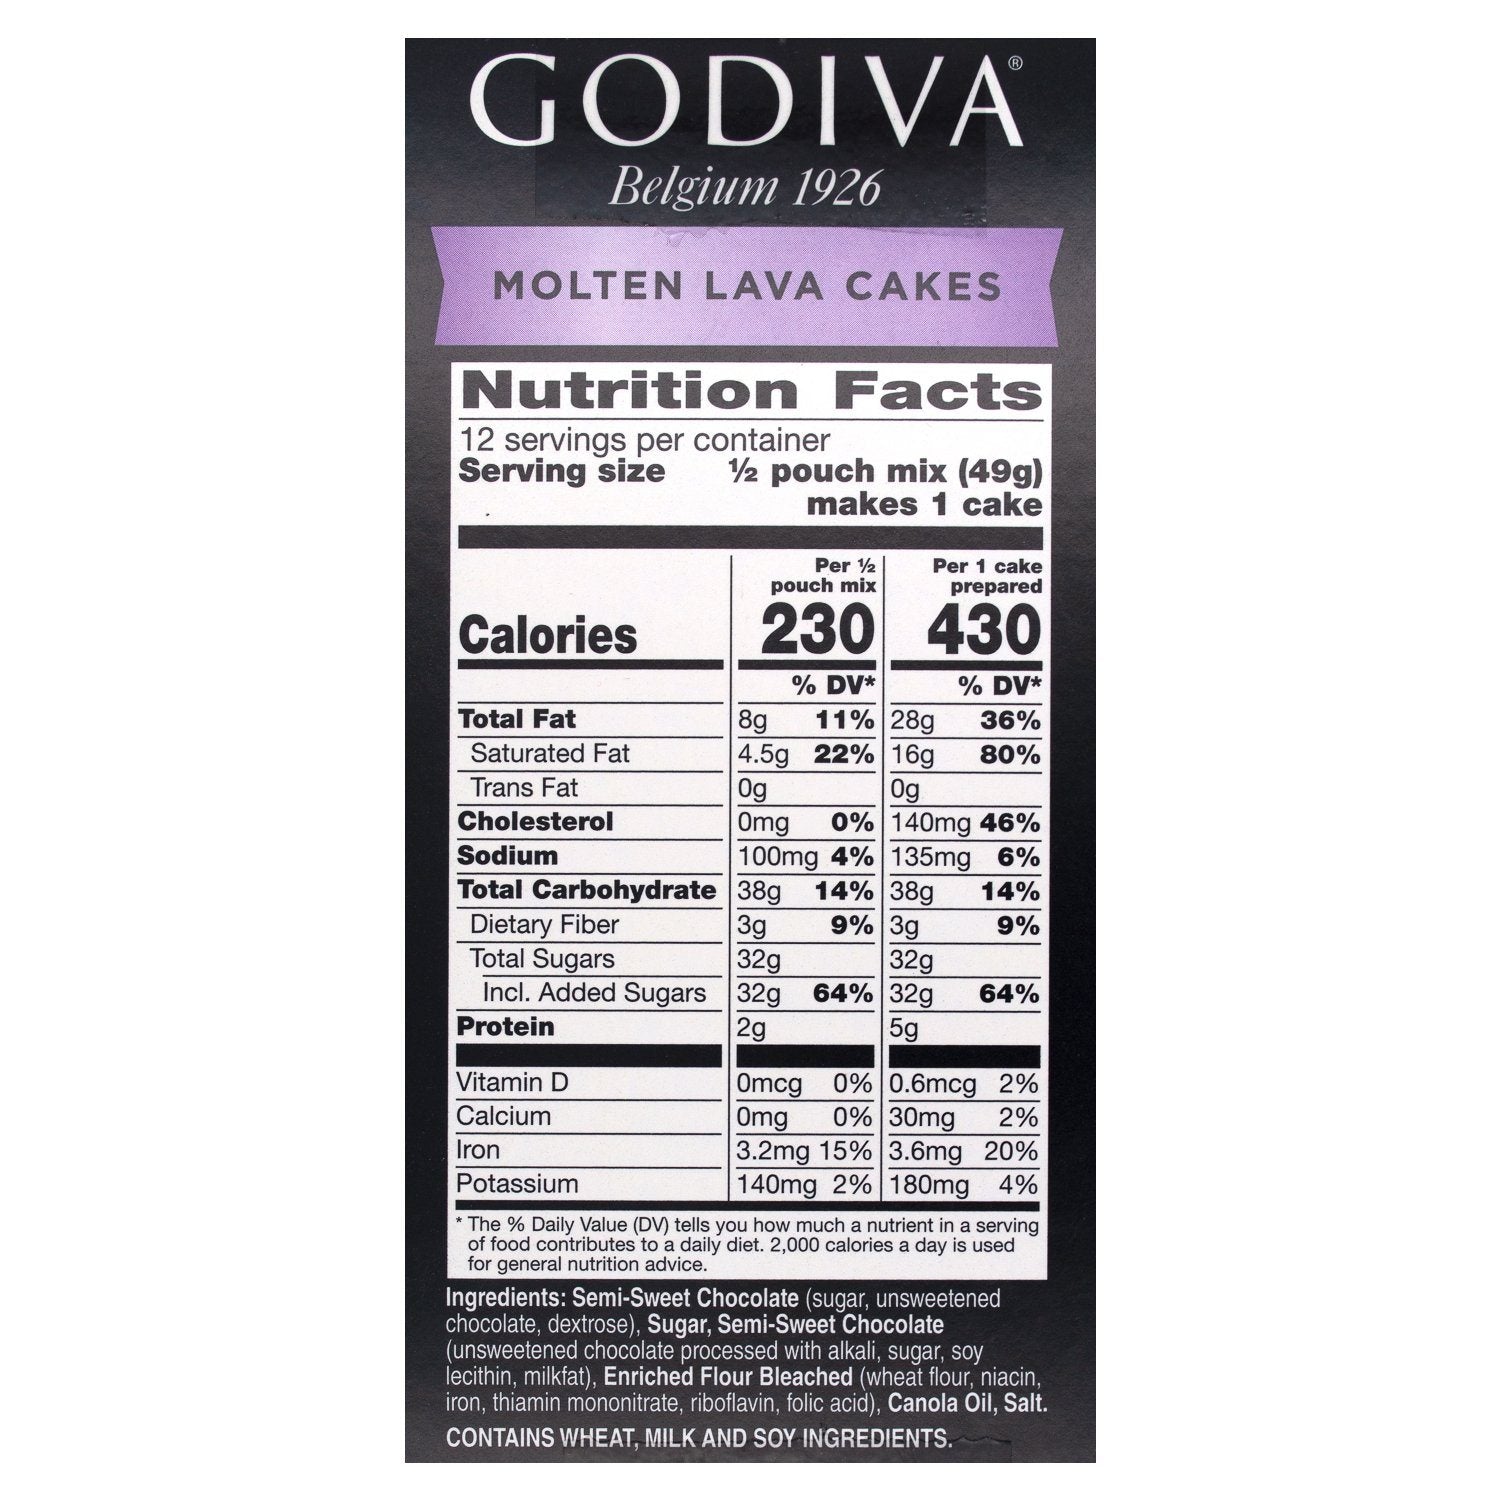 Godiva Baking Mixes Godiva 